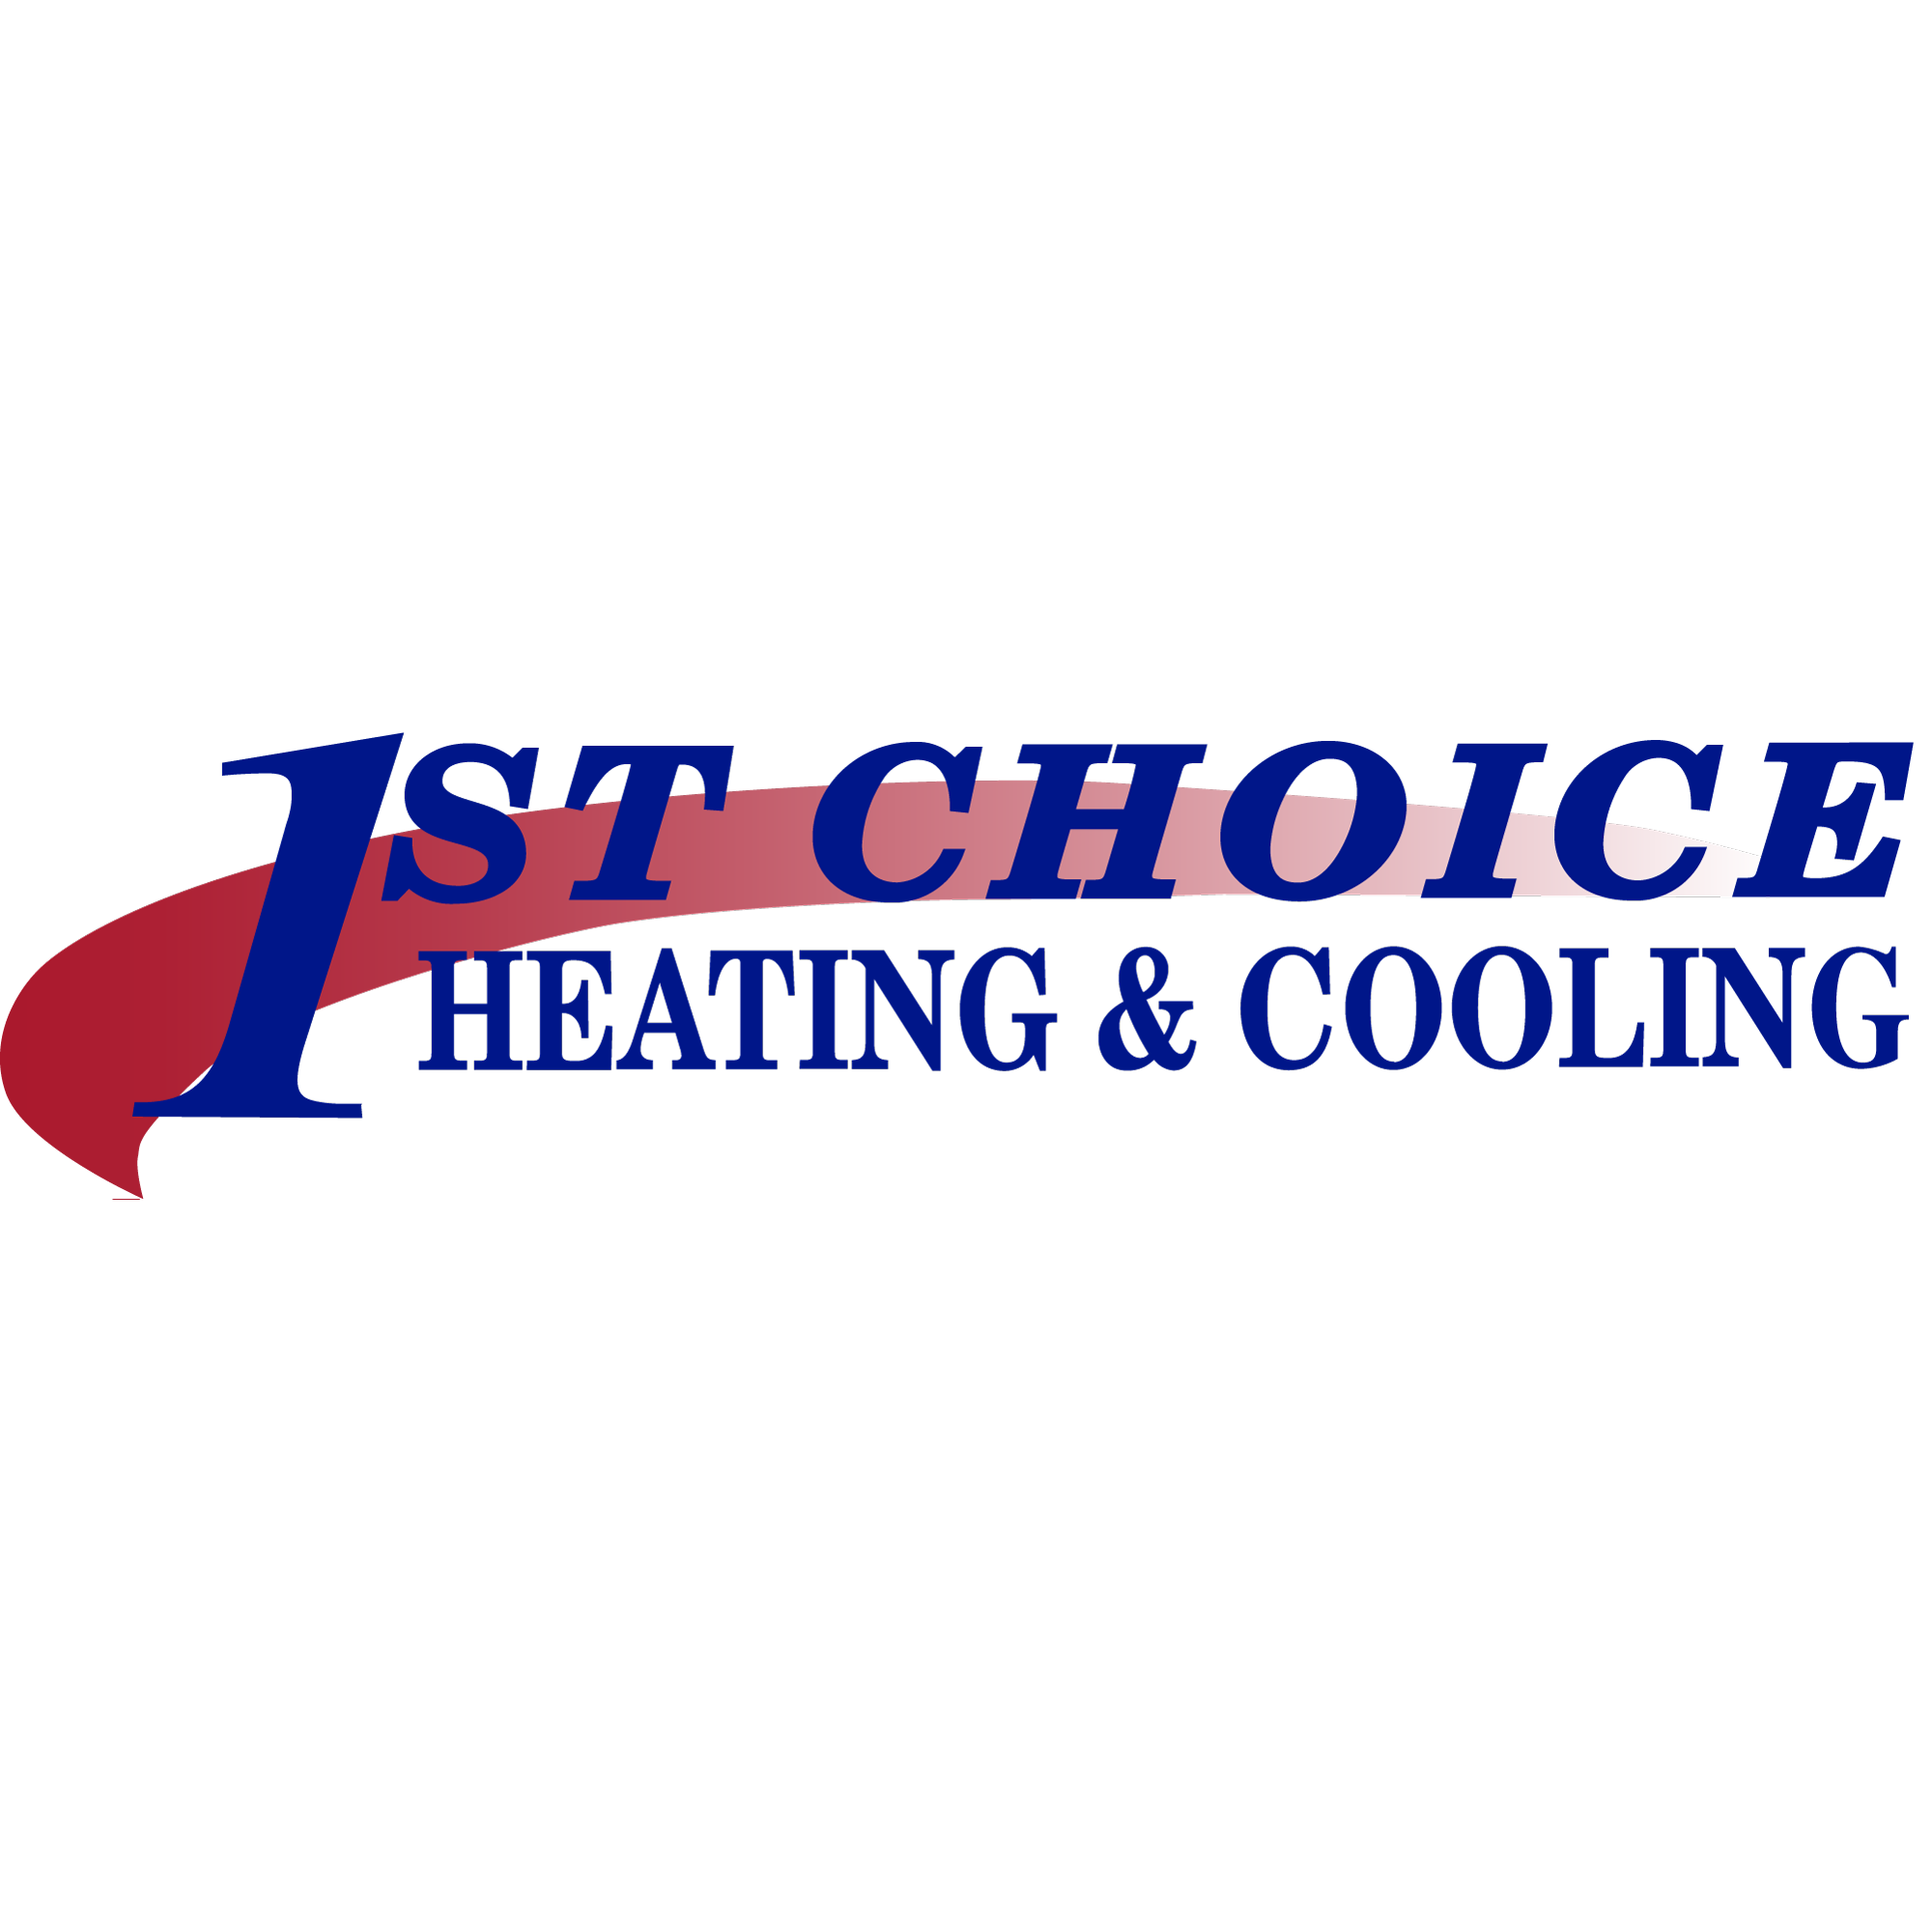 1st Choice Heating & Cooling - Waukesha, WI 53189 - (262)547-2030 | ShowMeLocal.com